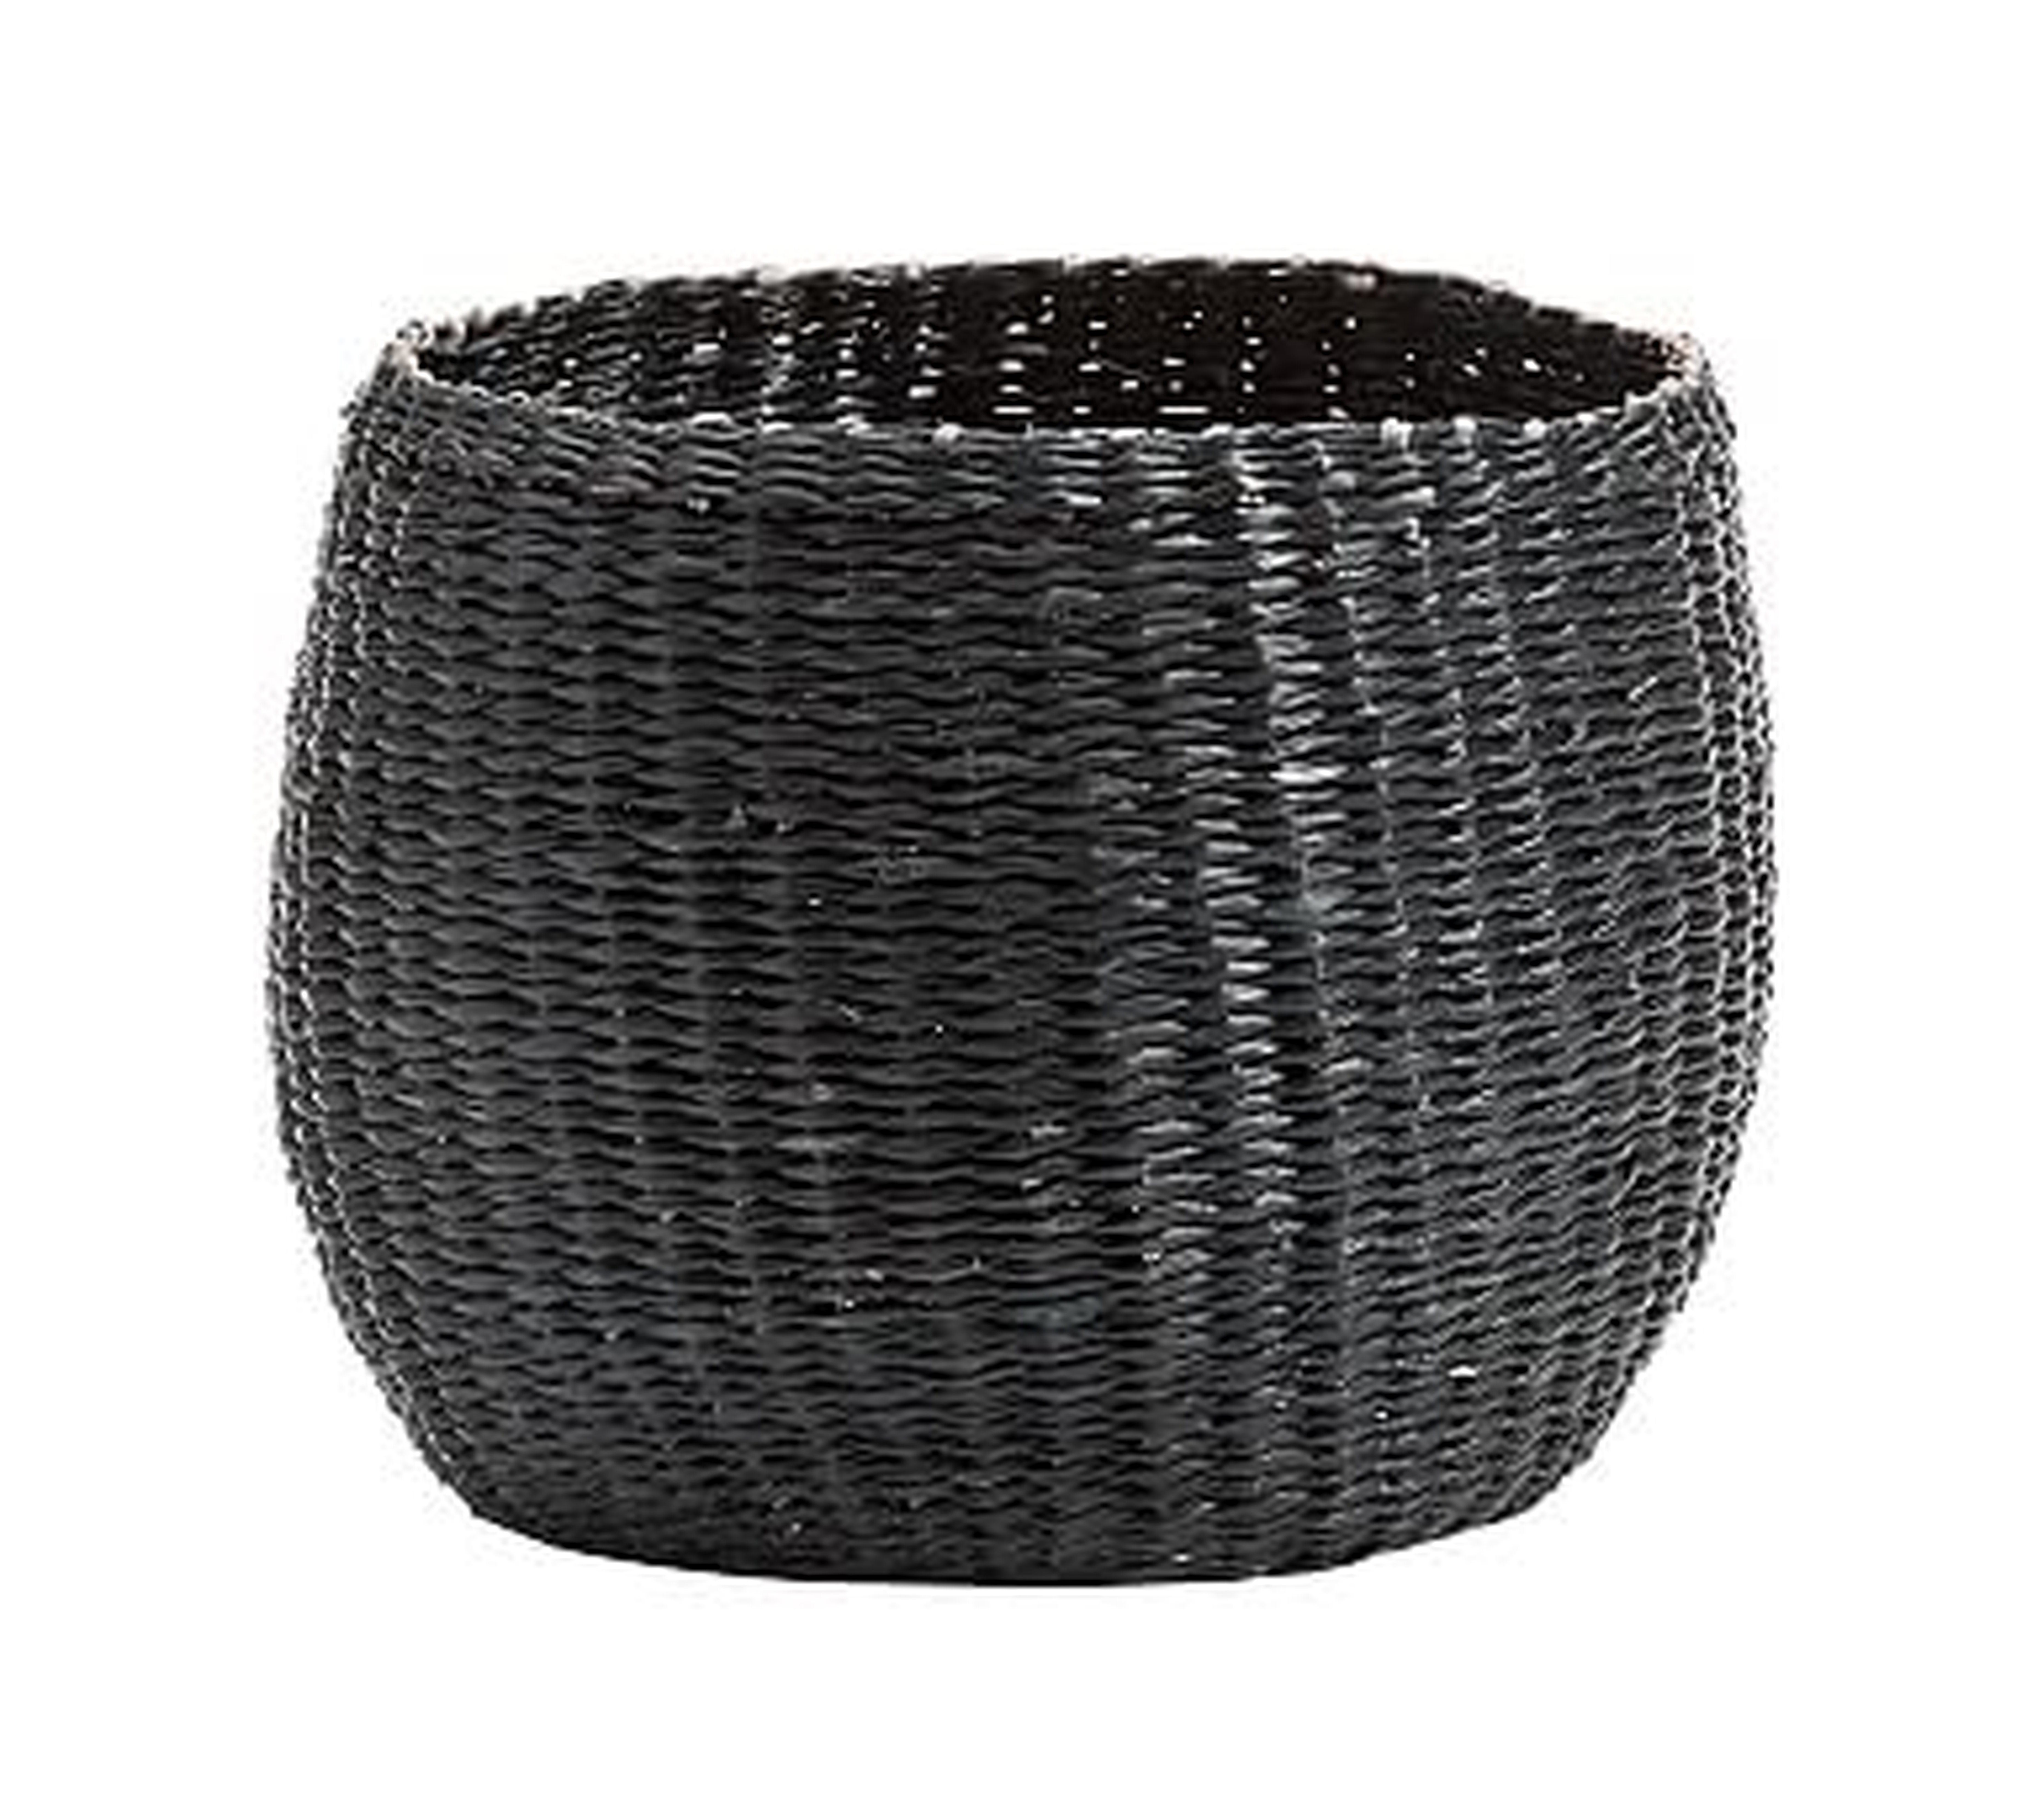 Lima Woven Basket, Black, Small - Pottery Barn